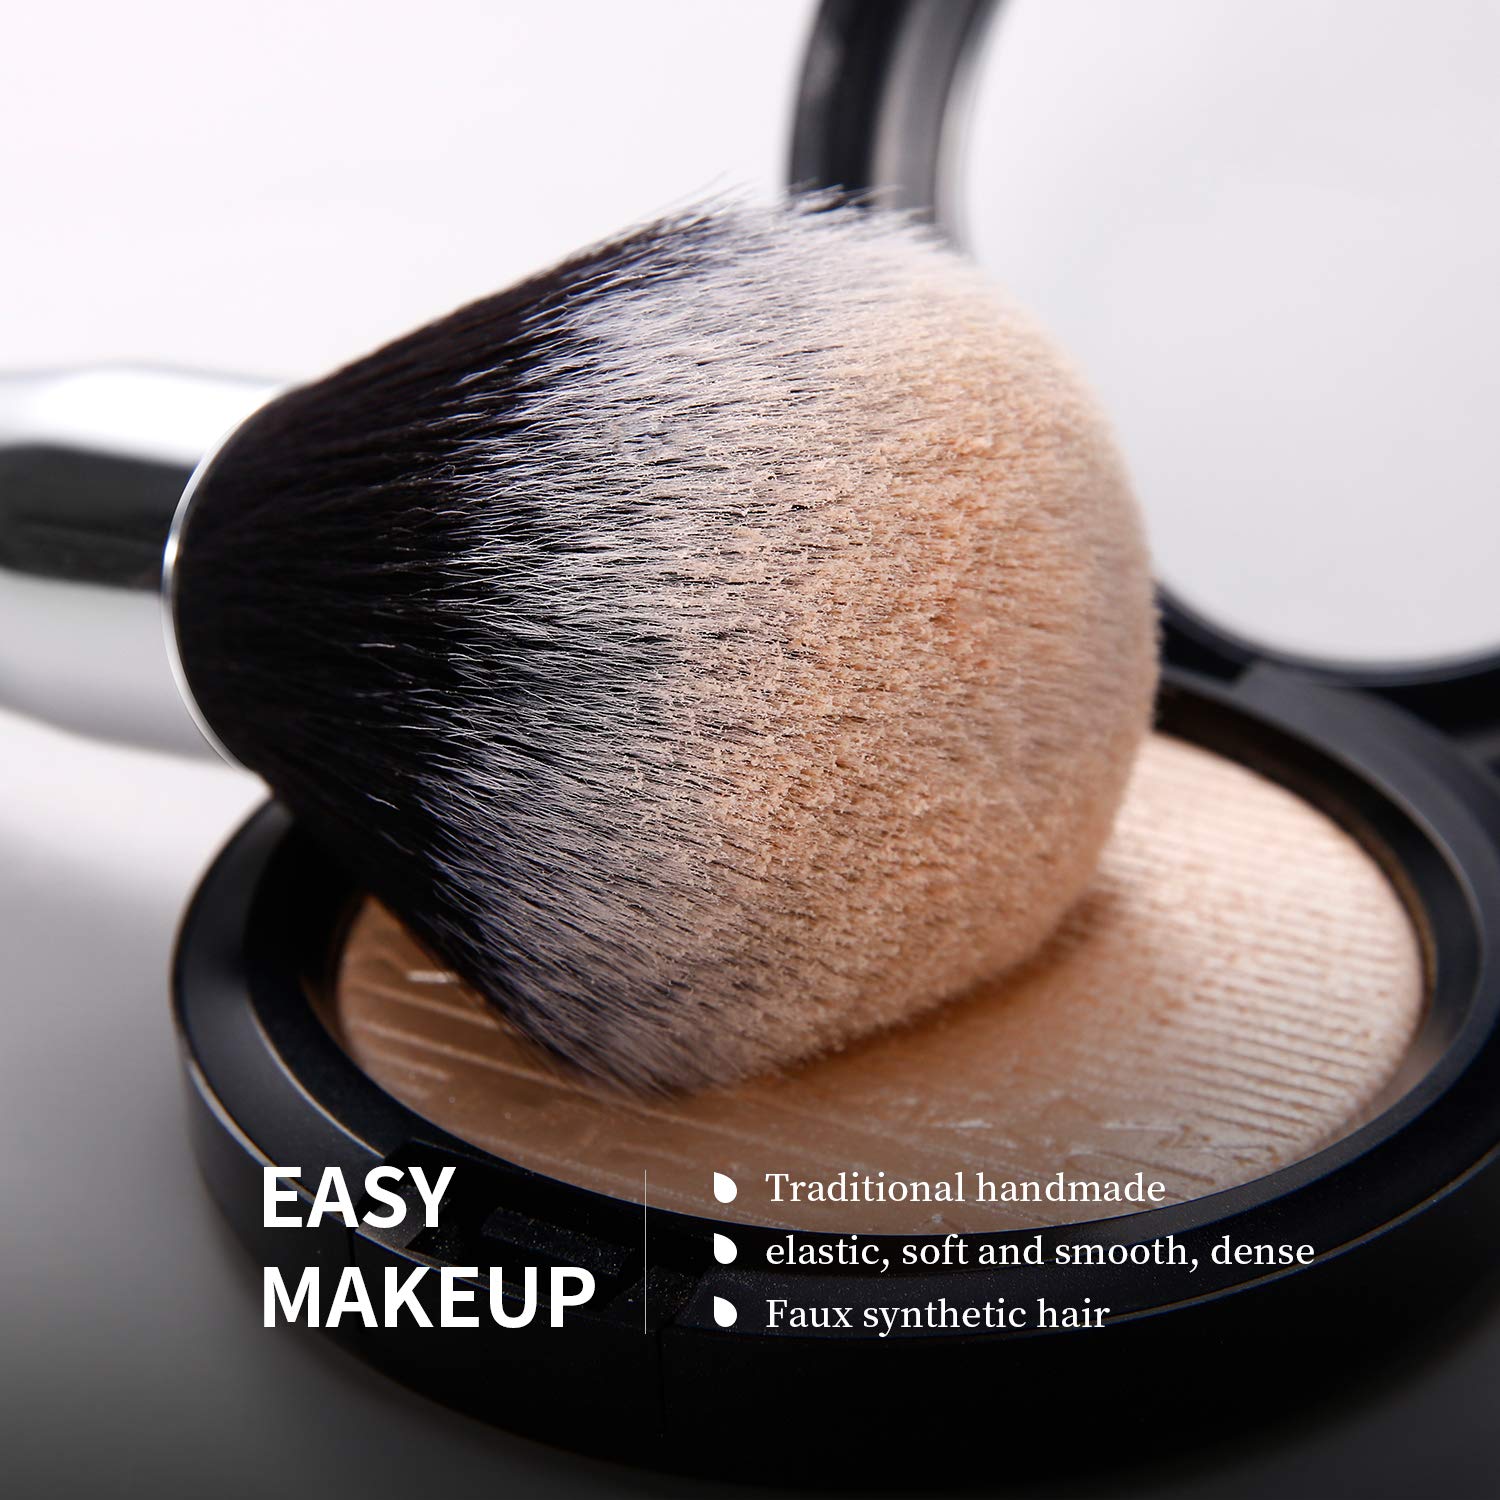 DUcare Makeup Brushes Professional 32Pcs Make up Brushes Set Premium Synthetic Kabuki Foundation Blending Brush Face Powder Blush Concealers Eye Shadows